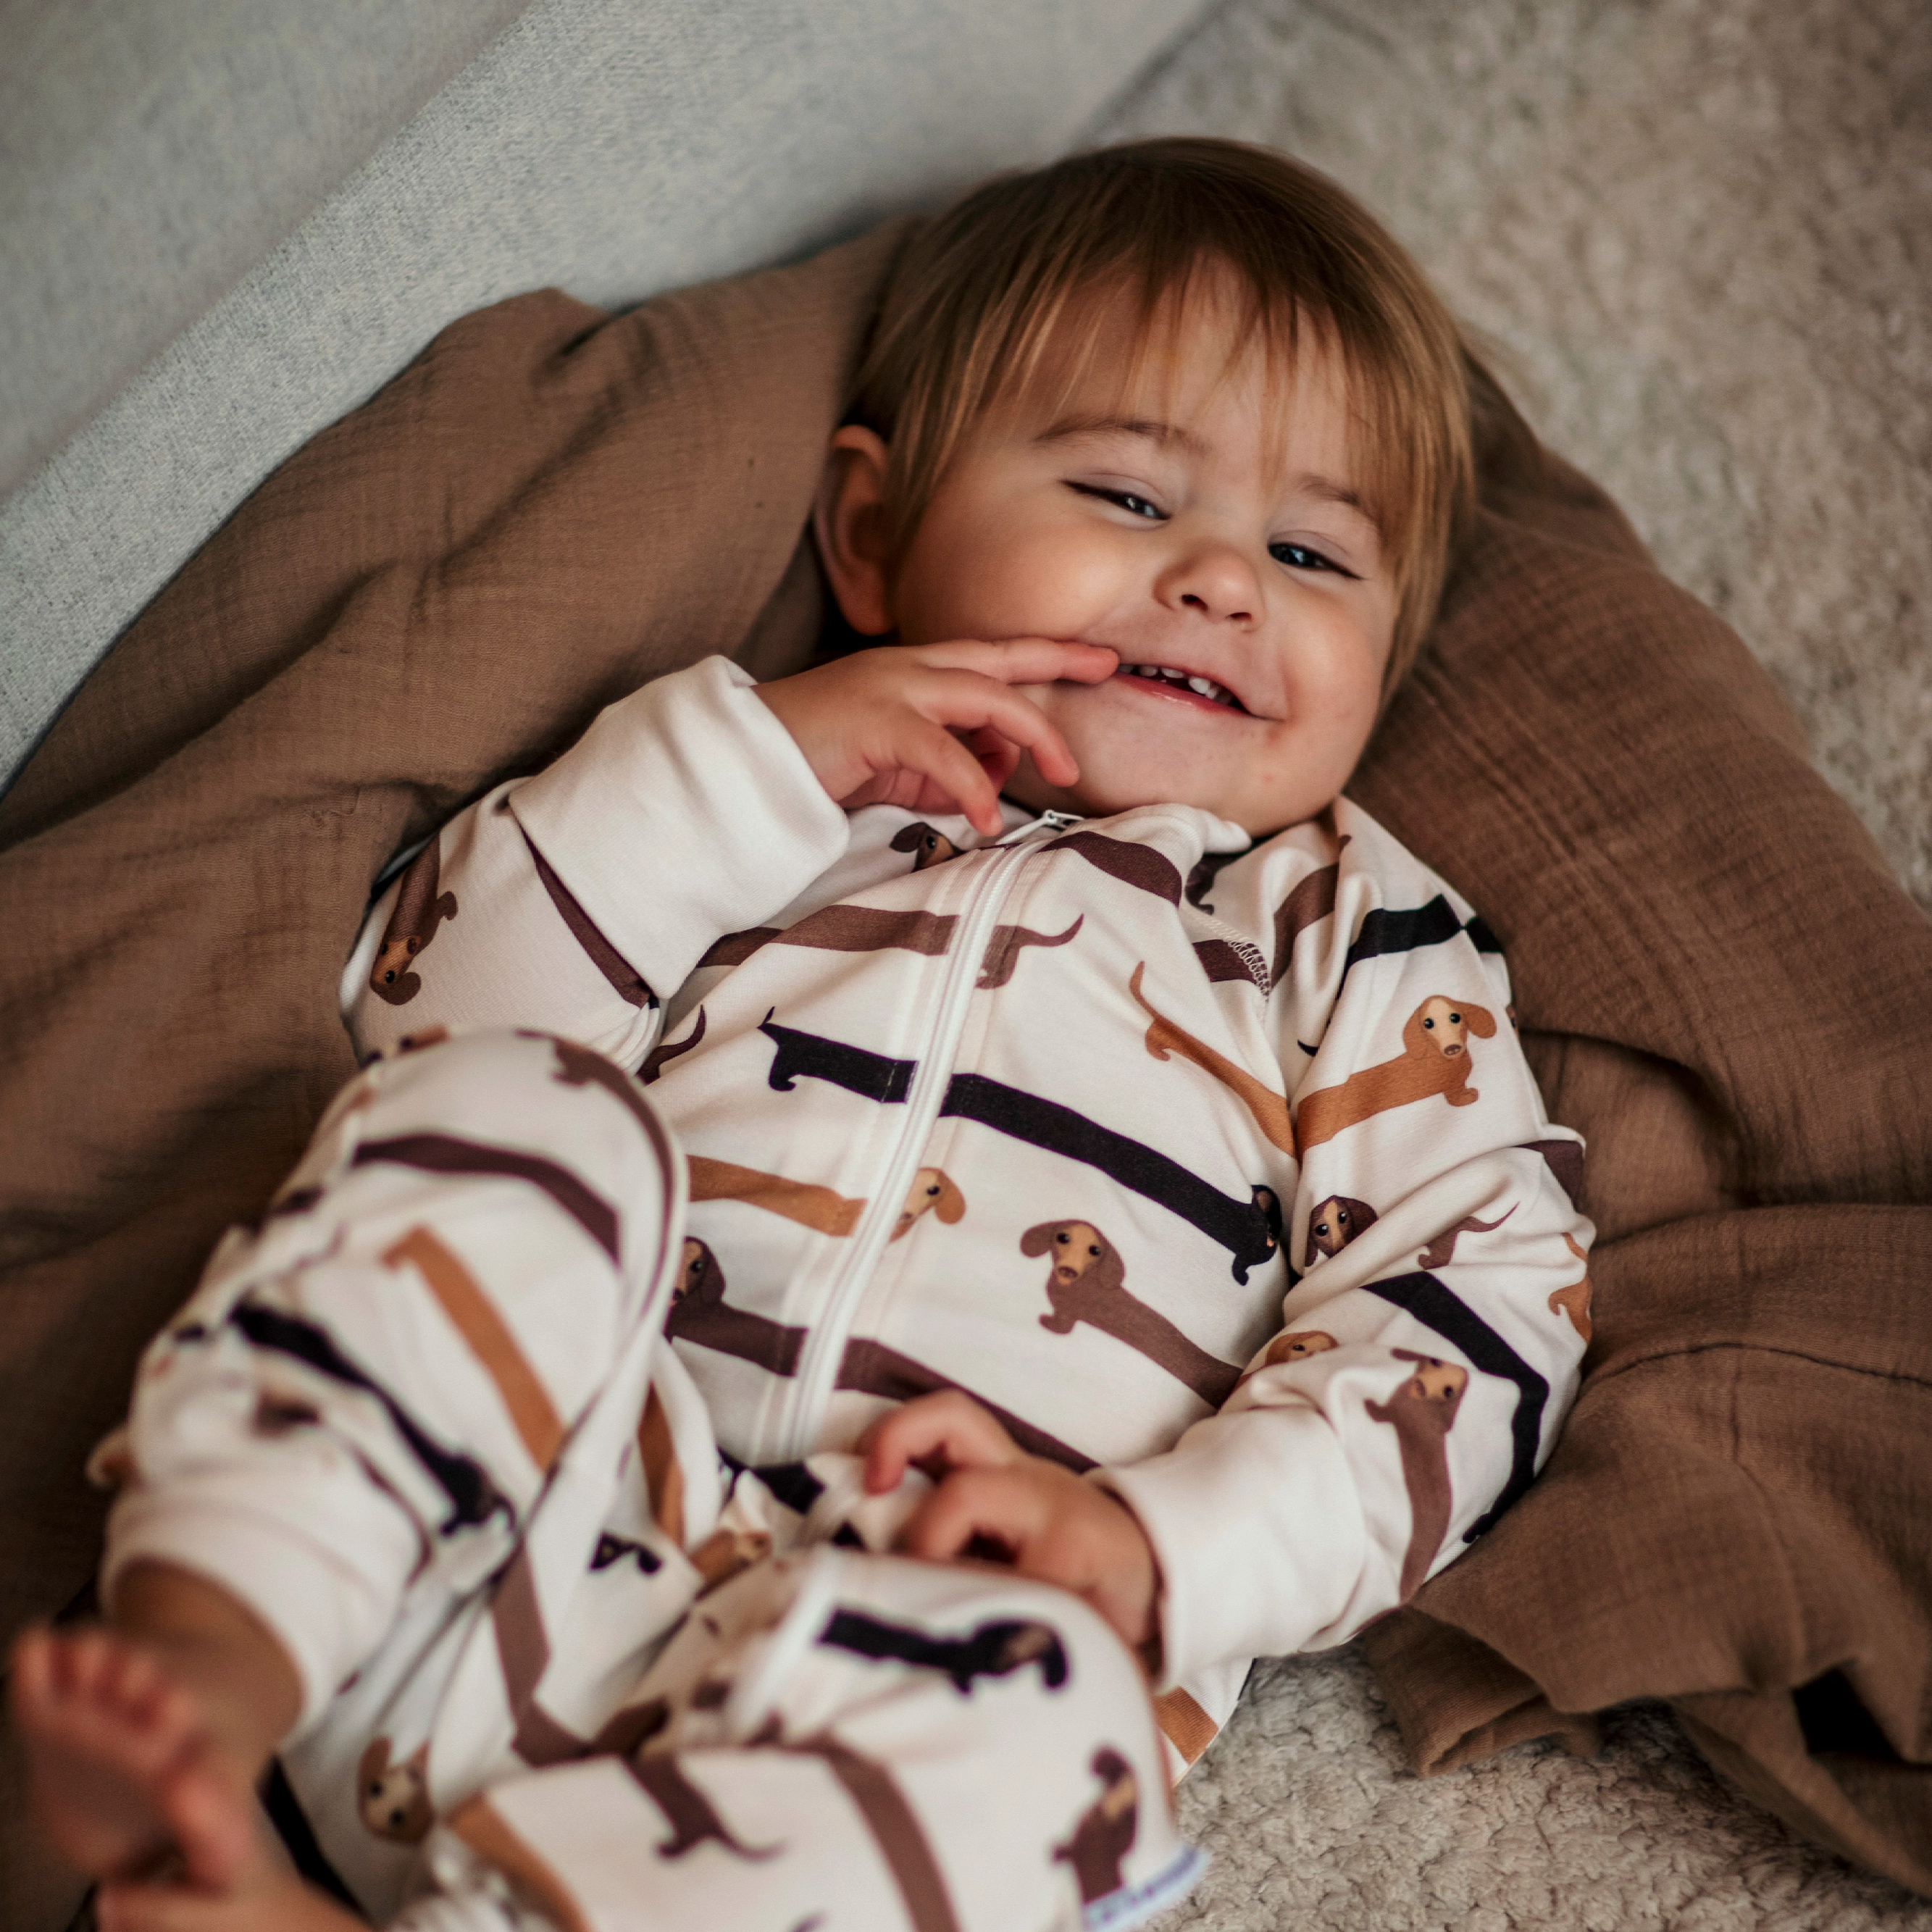 George - Pyjama 1-Pièce Fille 3 ans RoseBleu Printemps/été23